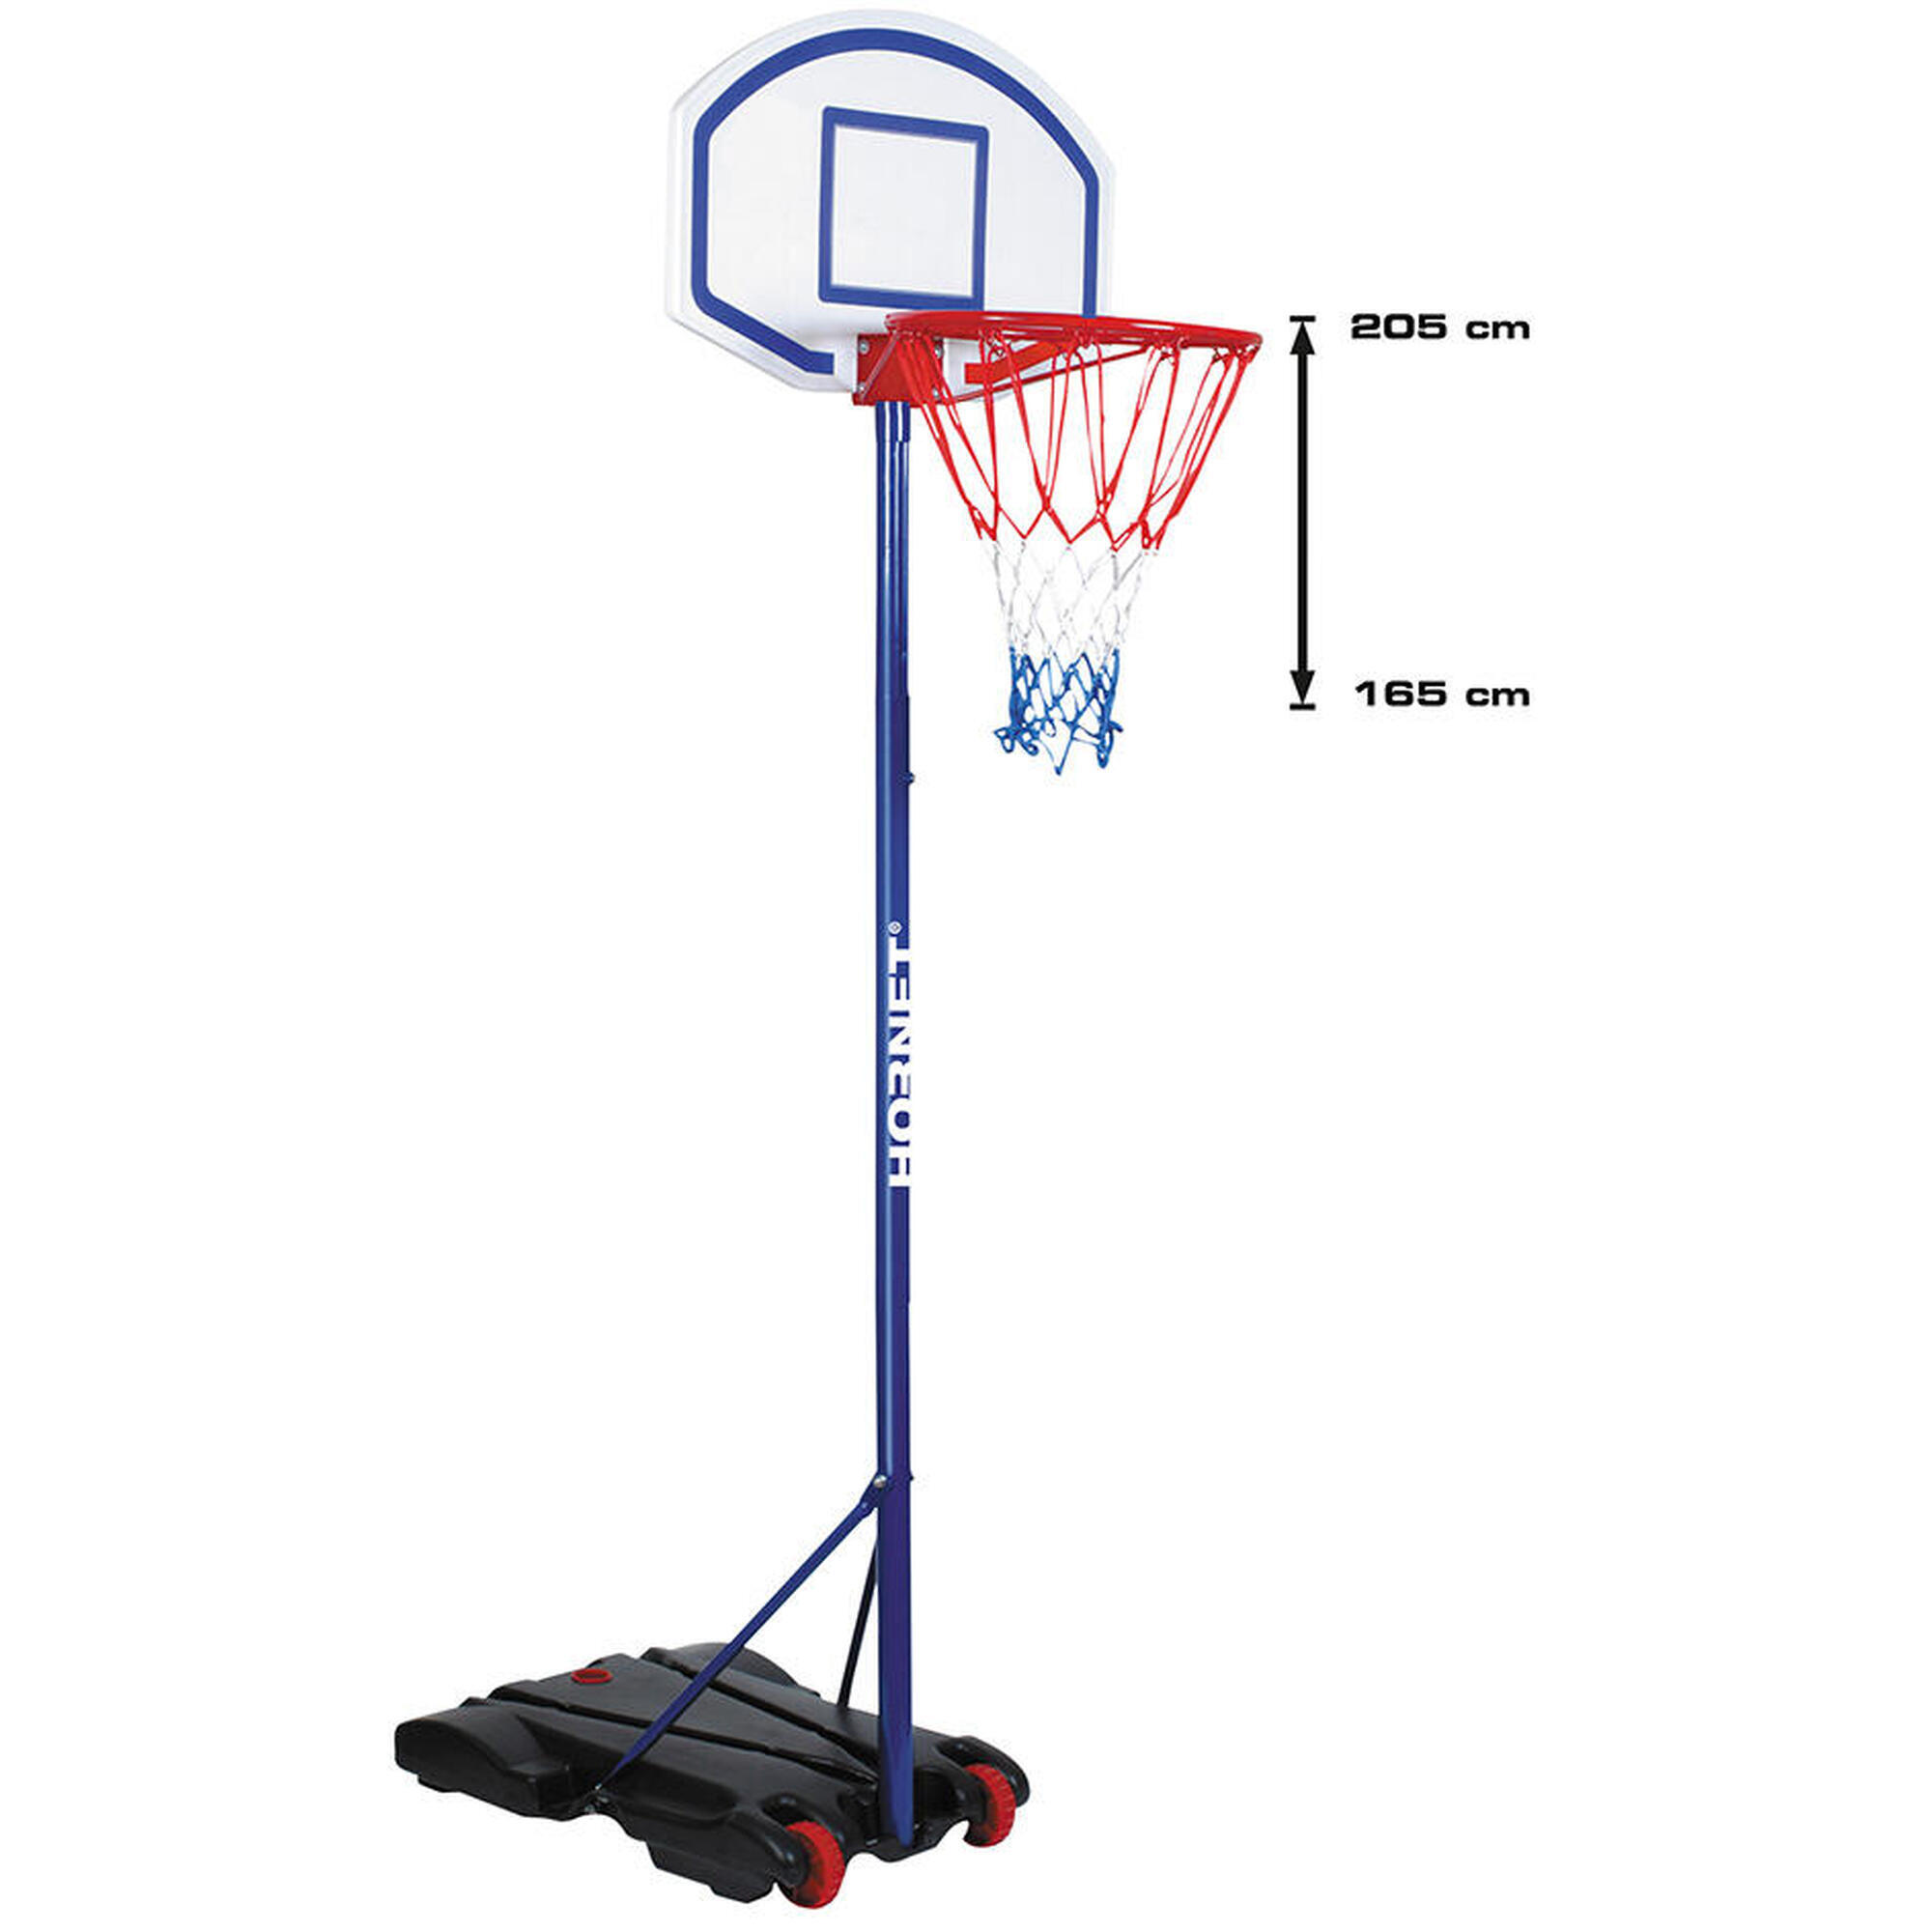 Hudora 71622 verstellbarer Basketballständer Hornet bis 205 cm Korbhöhe